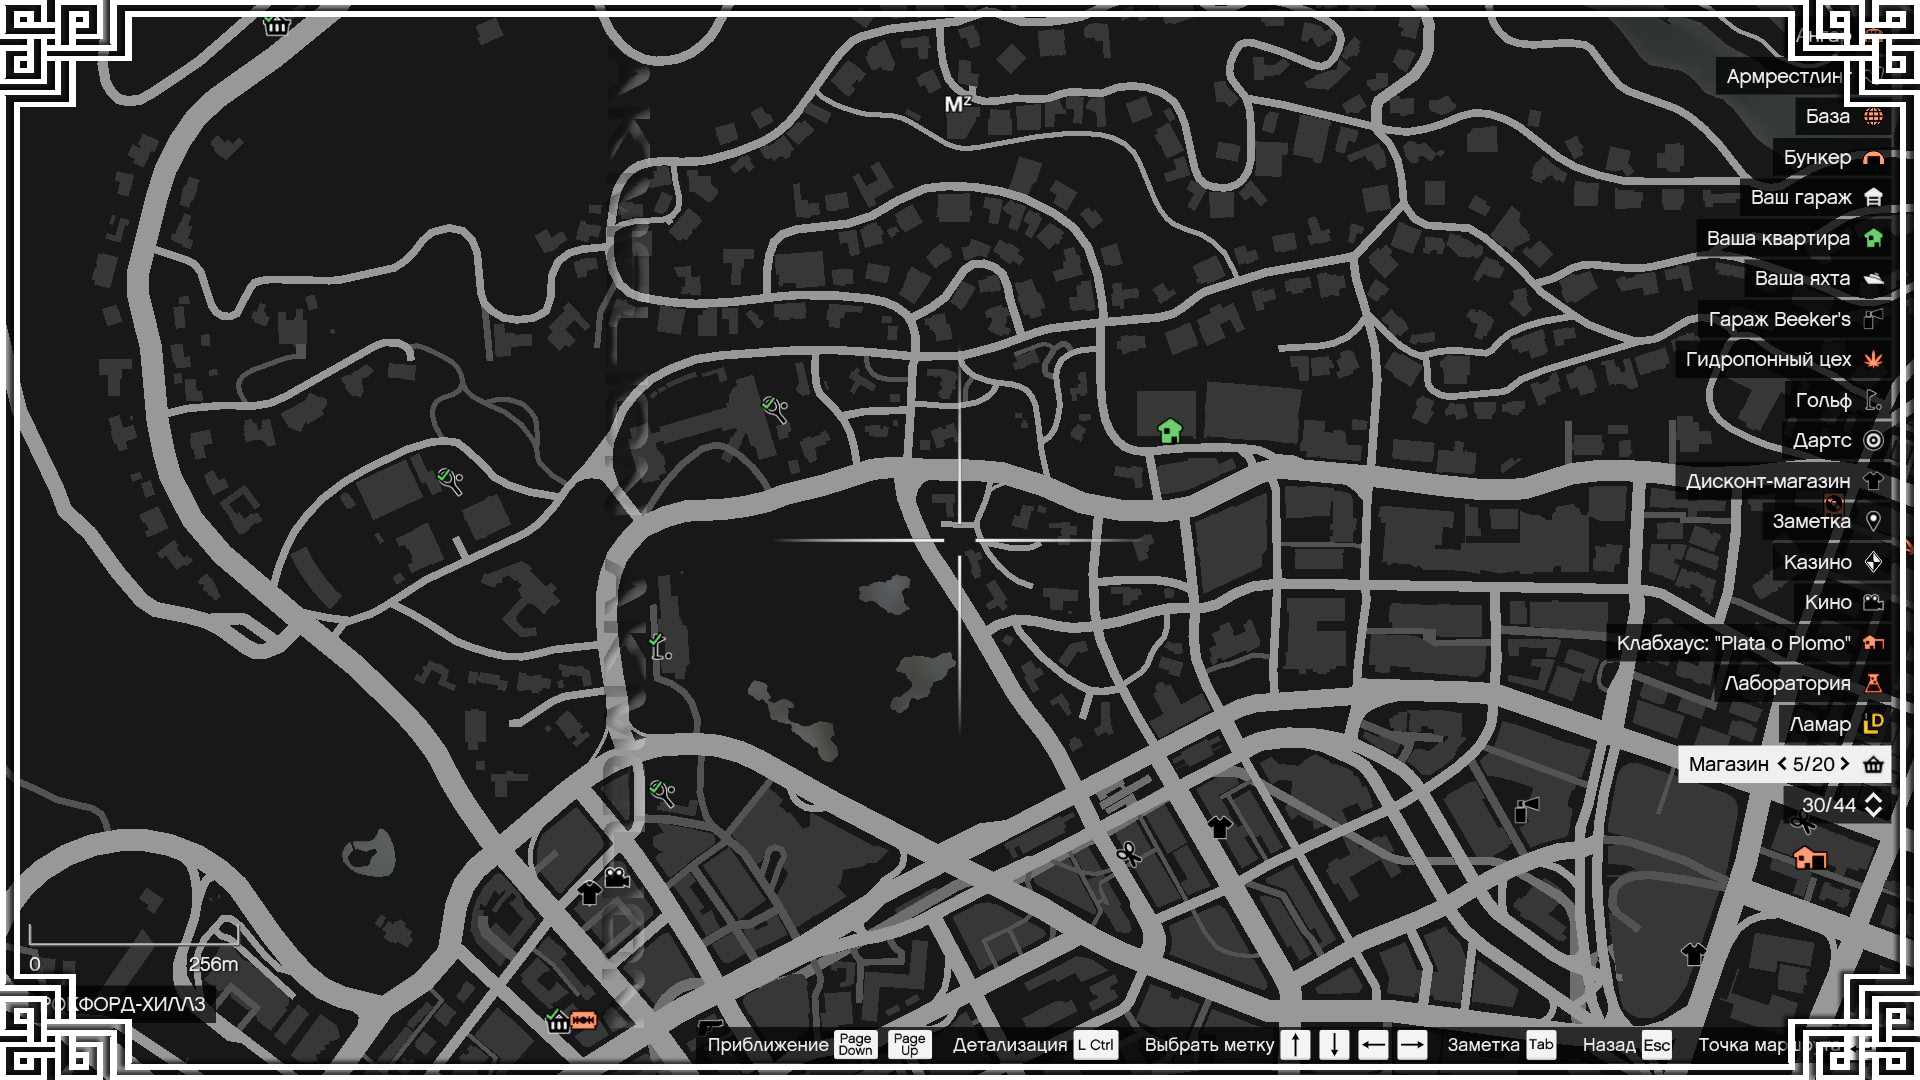 GTA 5 Action Figures Map